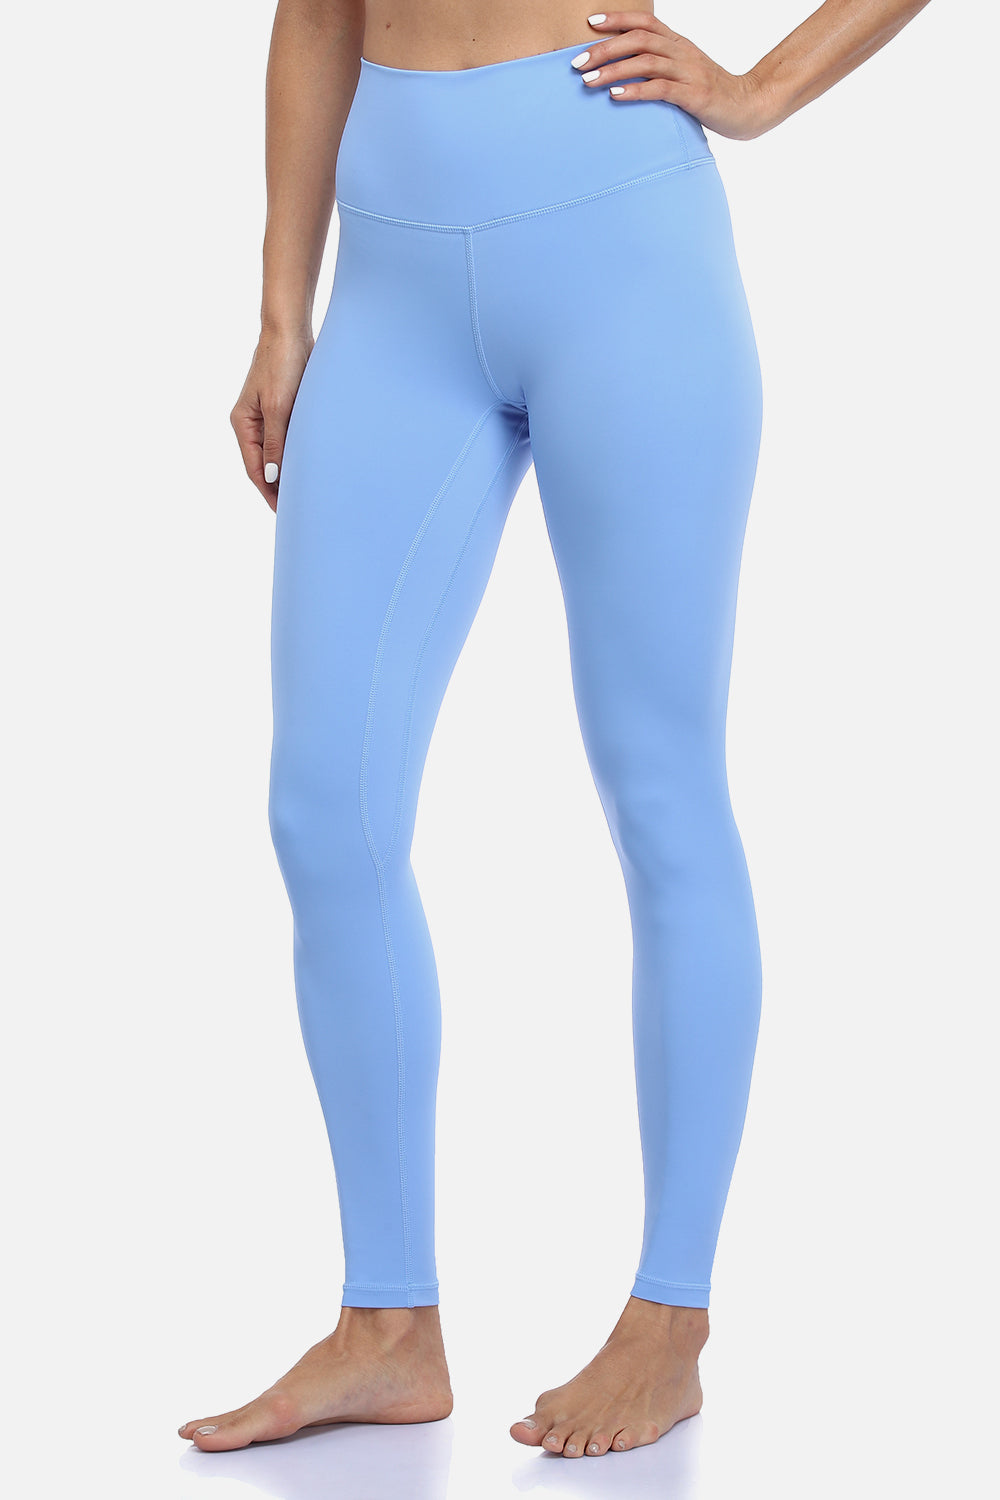 GetUSCart- Colorfulkoala Women's Buttery Soft High Waisted Yoga Pants  Full-Length Leggings (XS, Titanium Grey)